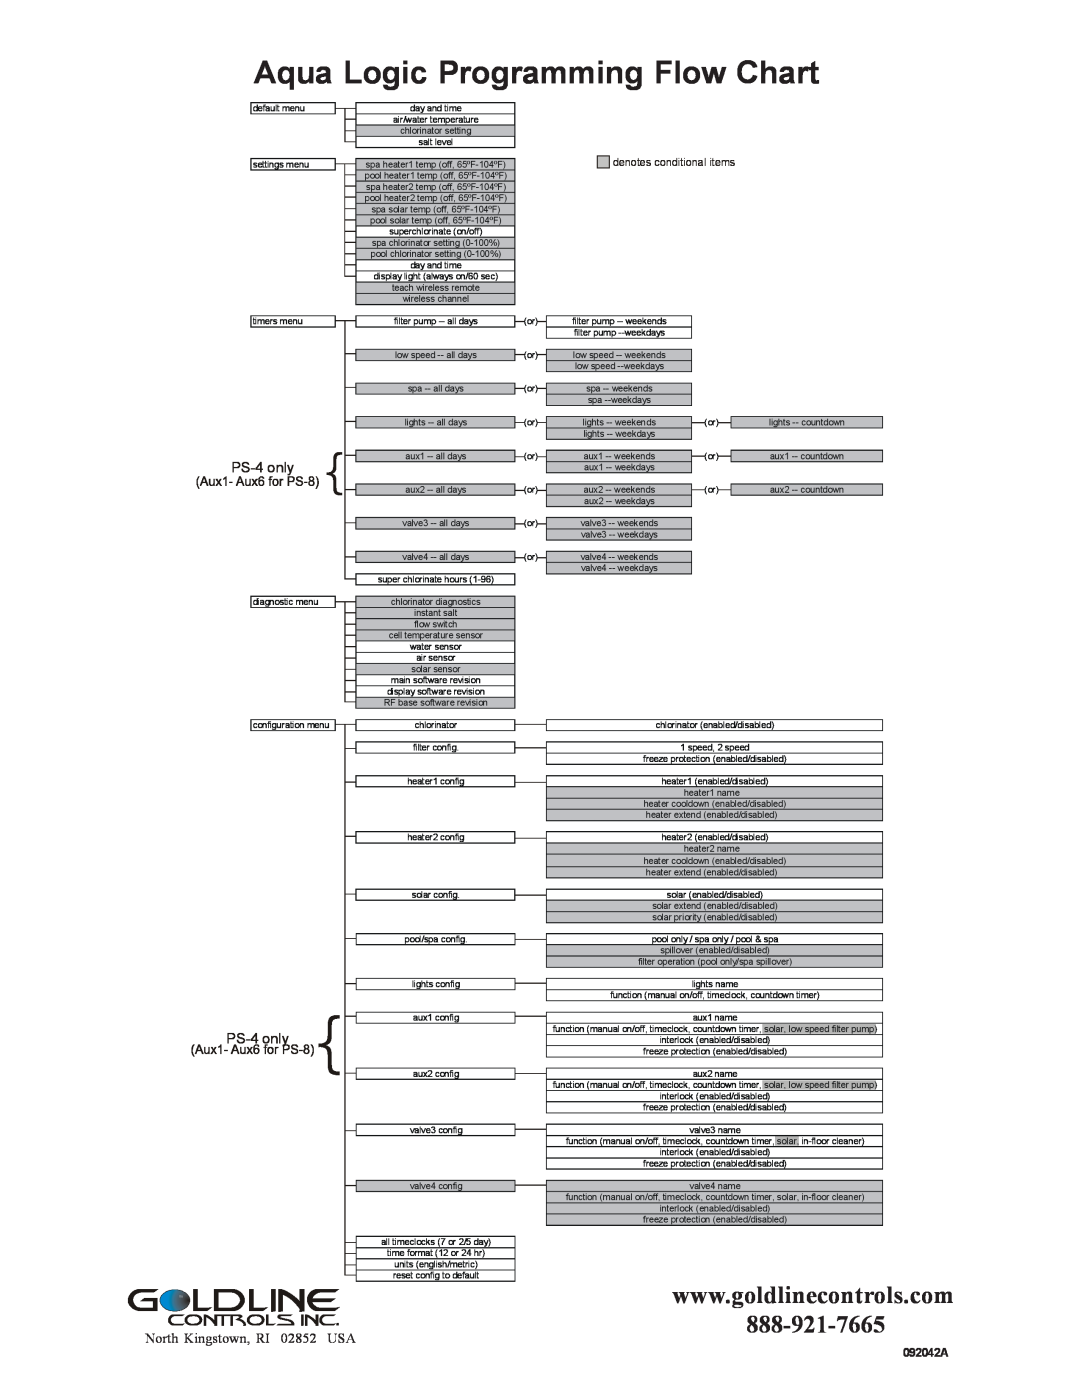 Raypak PS-4 PS-8 Aqua Logic Programming Flow Chart, Gldline, PS-4only, Controls Inc, North Kingstown, RI 02852 USA 